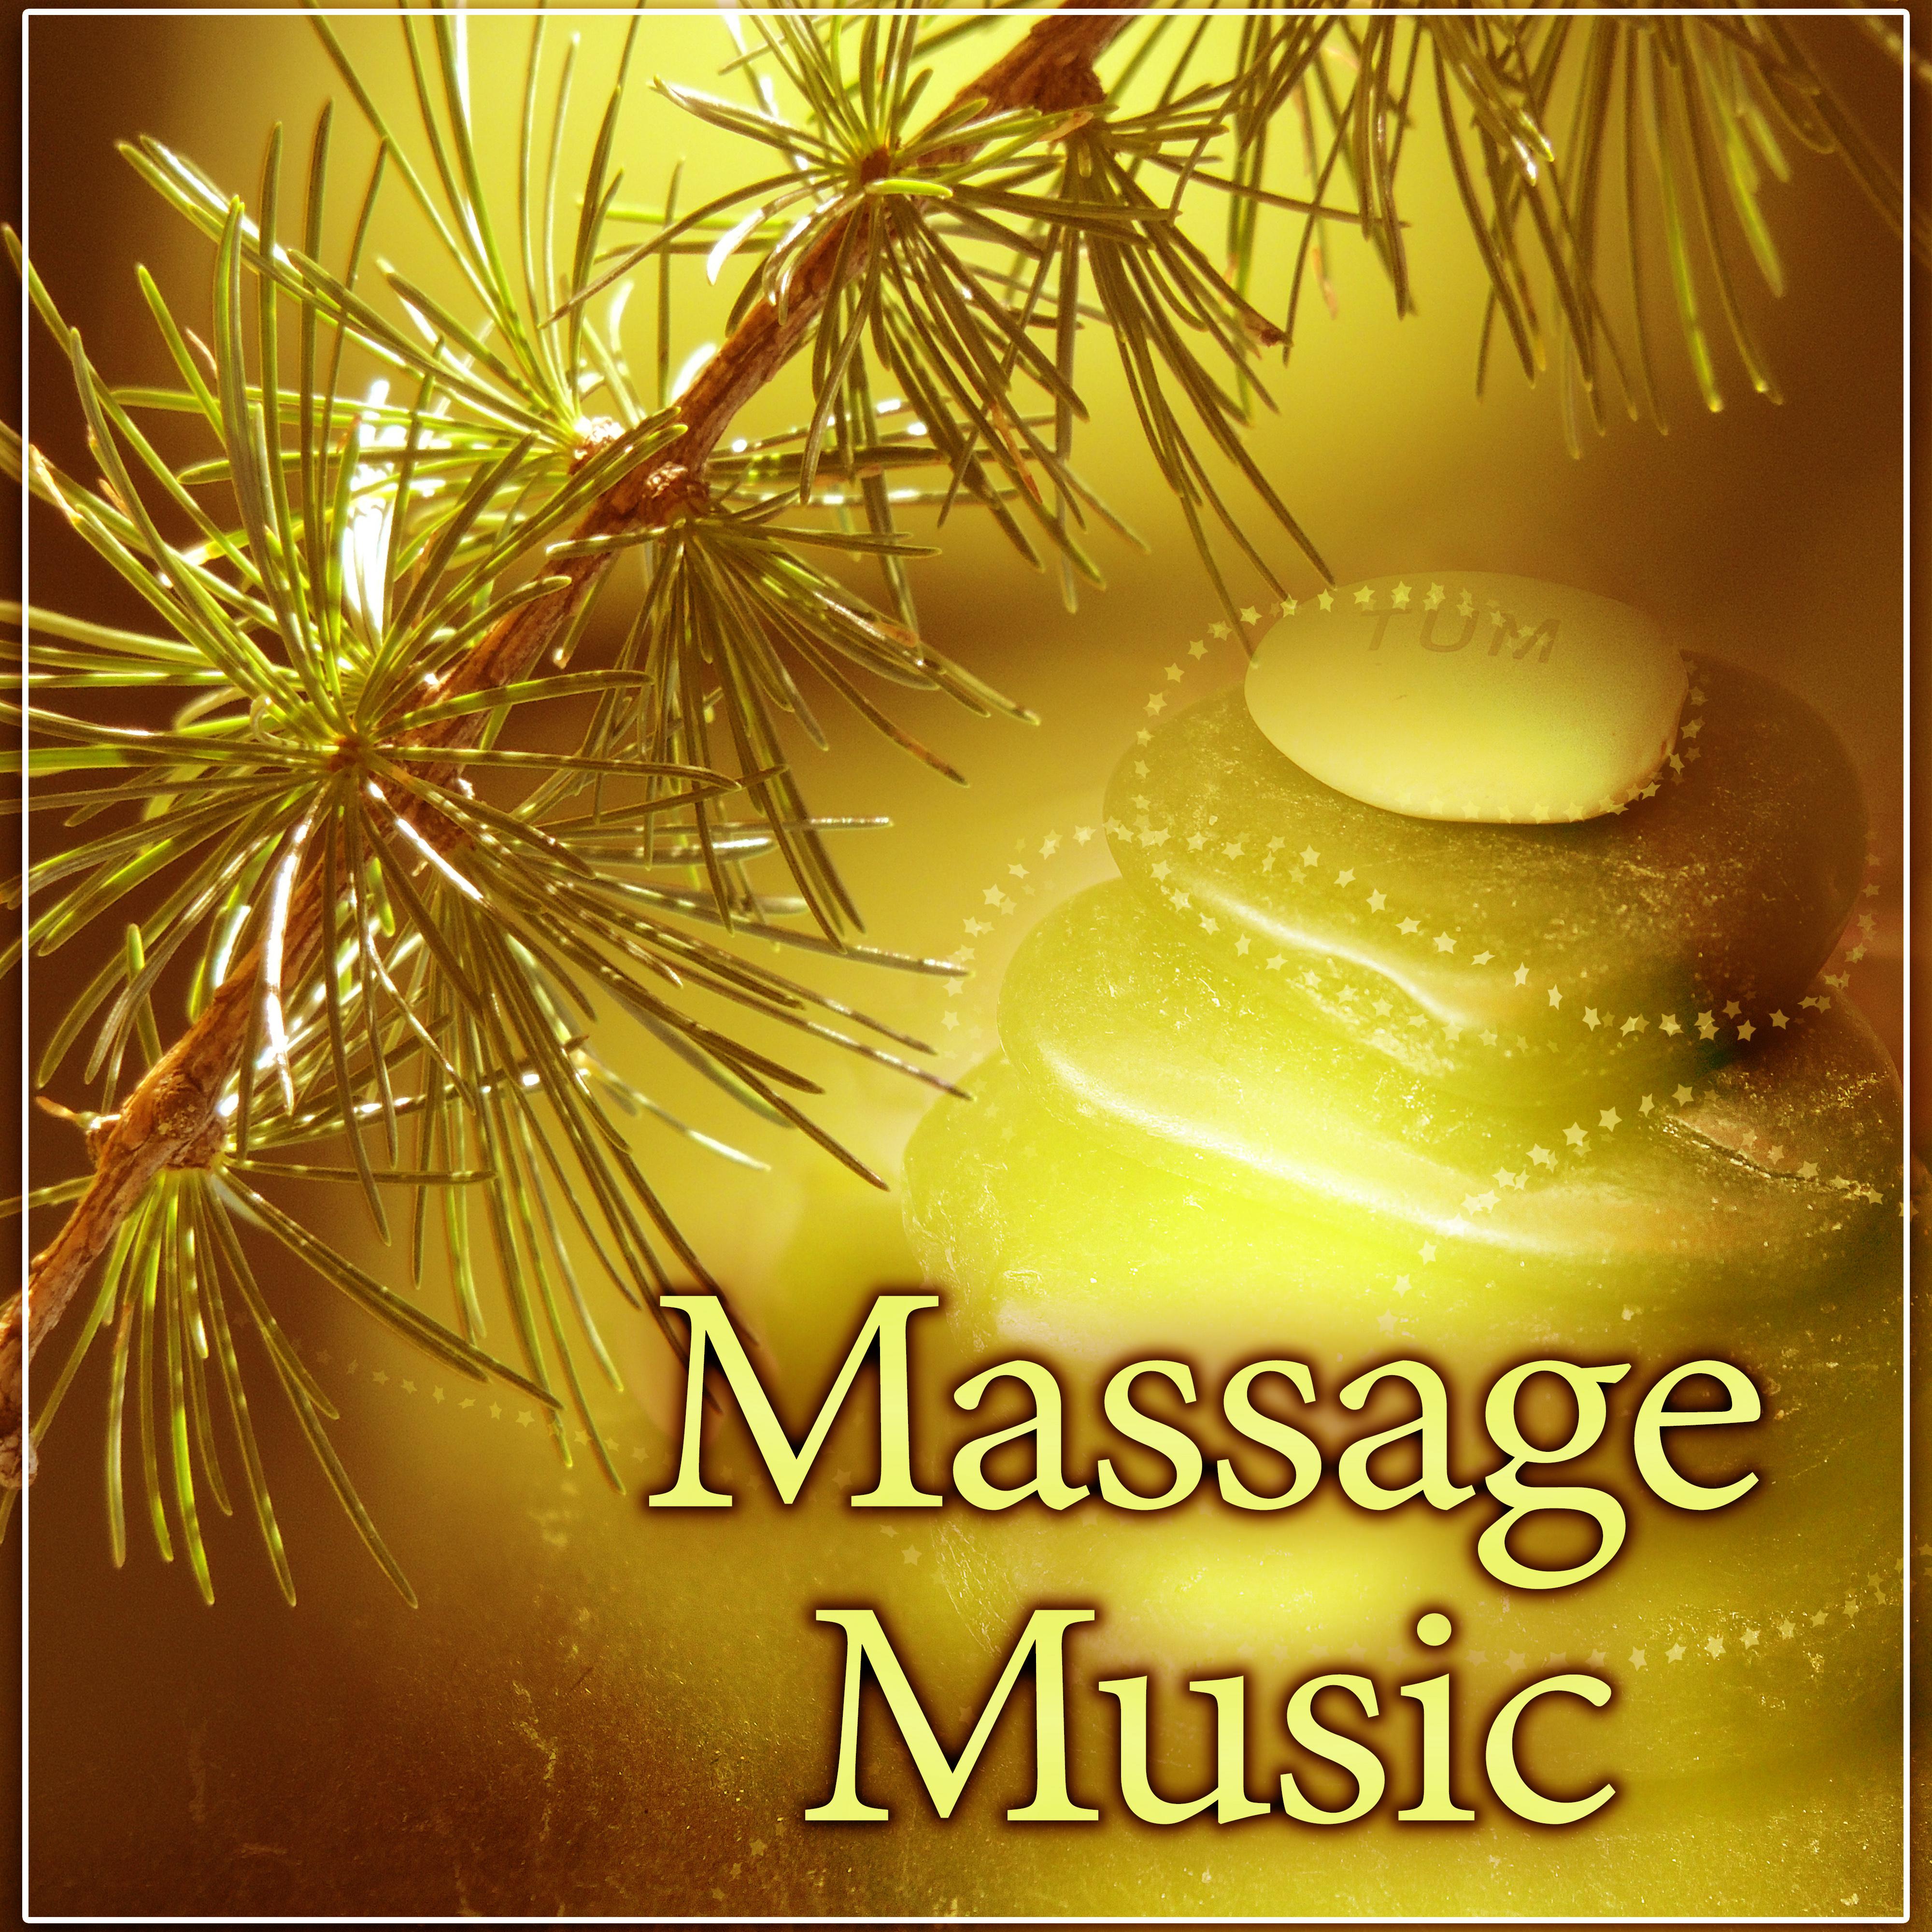 Massage Music – Calming Nature Music for Classic Massage, Hot Stone Massage, Chocolate Massage, Medical Massage, SPA, Relieve Stress, Relaxing Music, Beautiful Moments